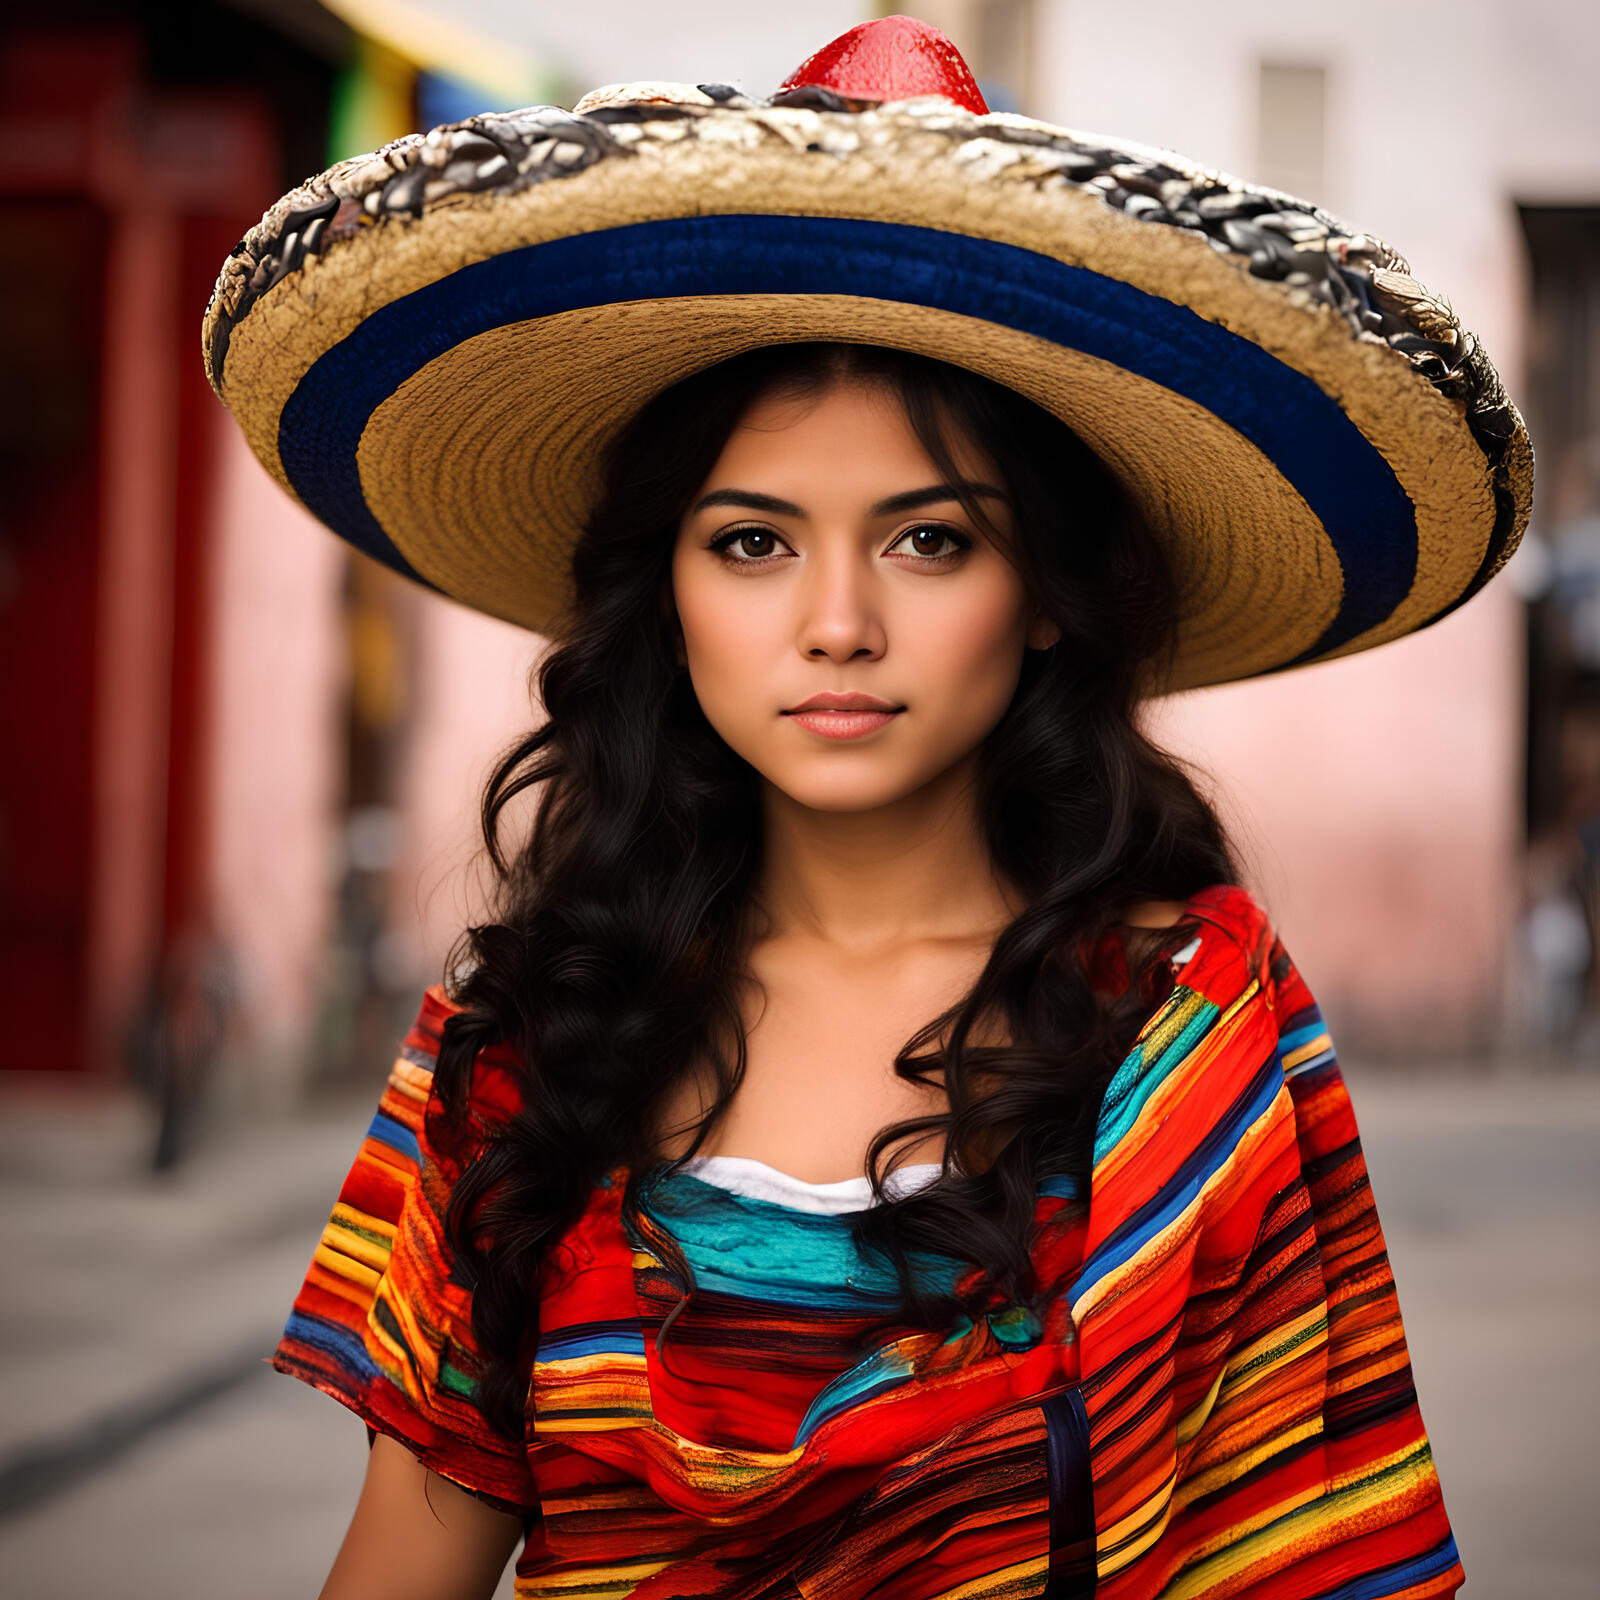 Бесплатное фото Mexican girl